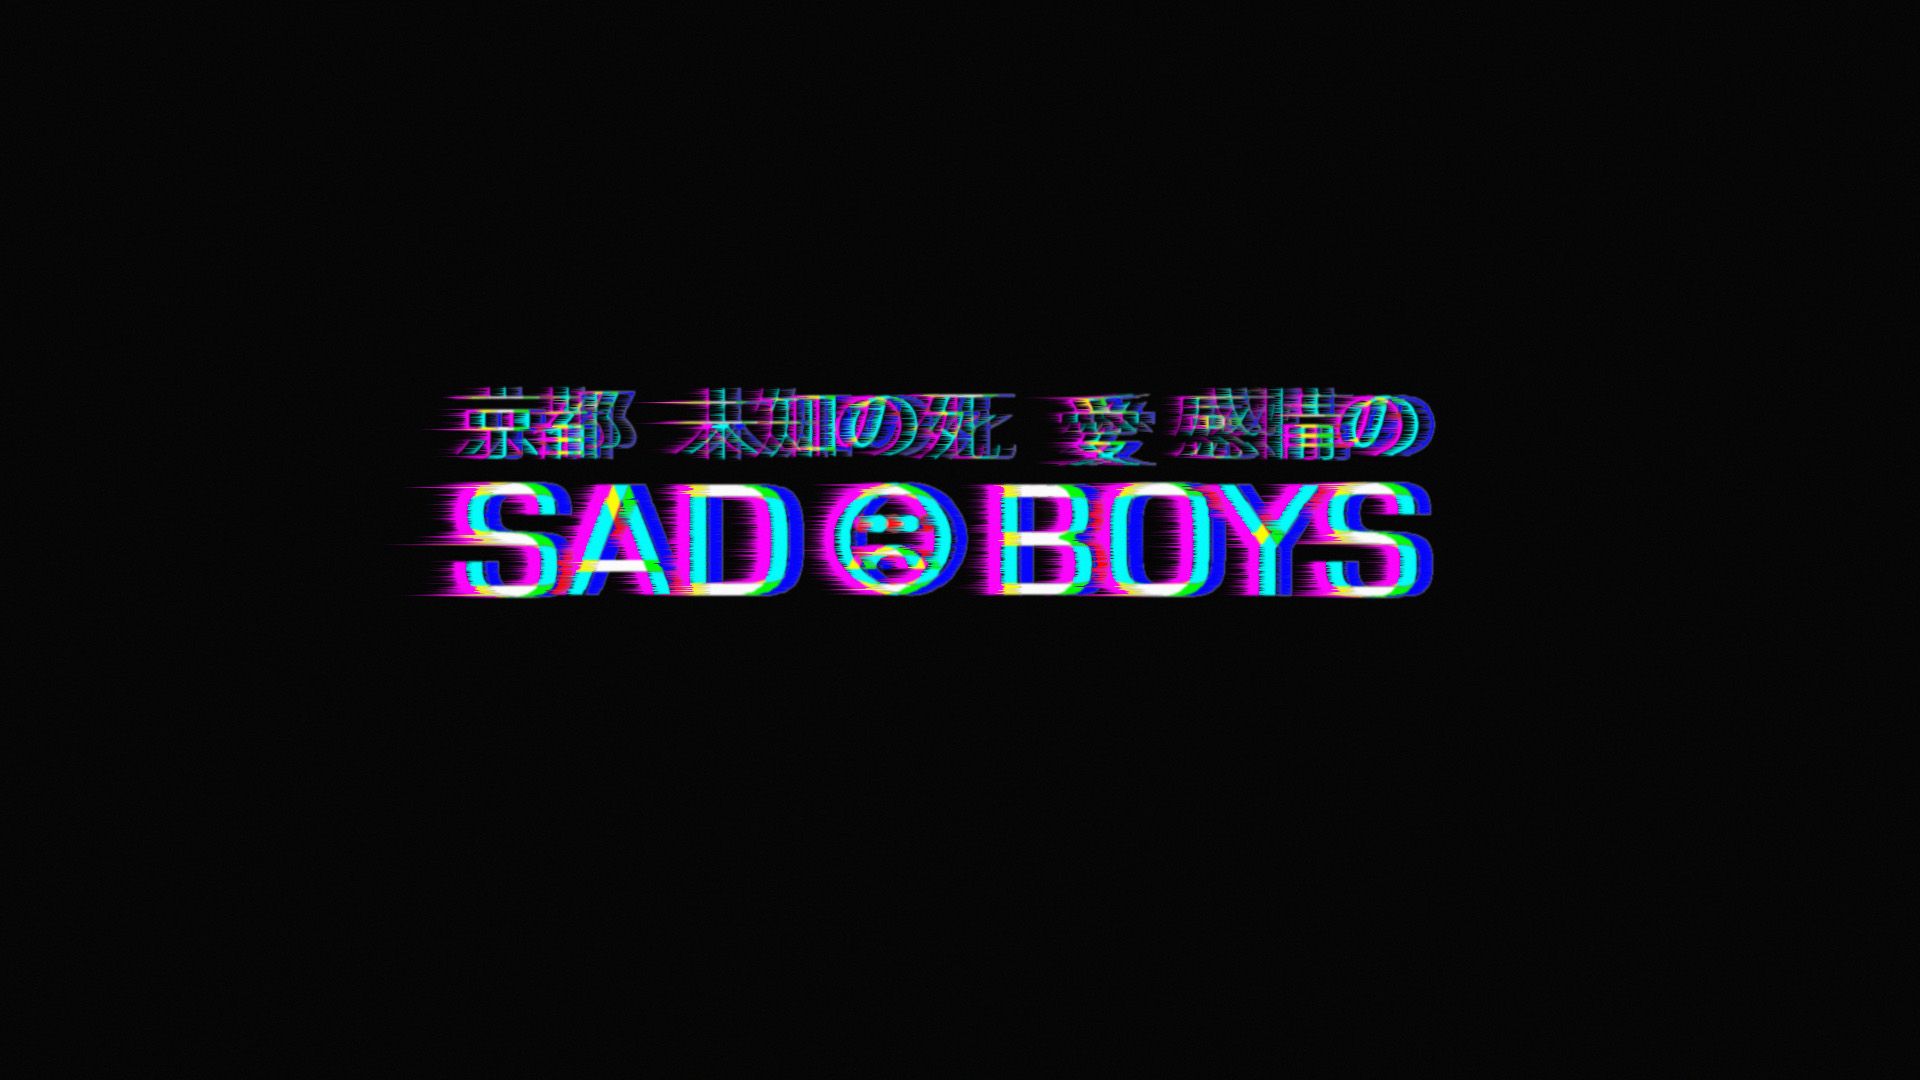 Alternative Sad Boys Wallpaper